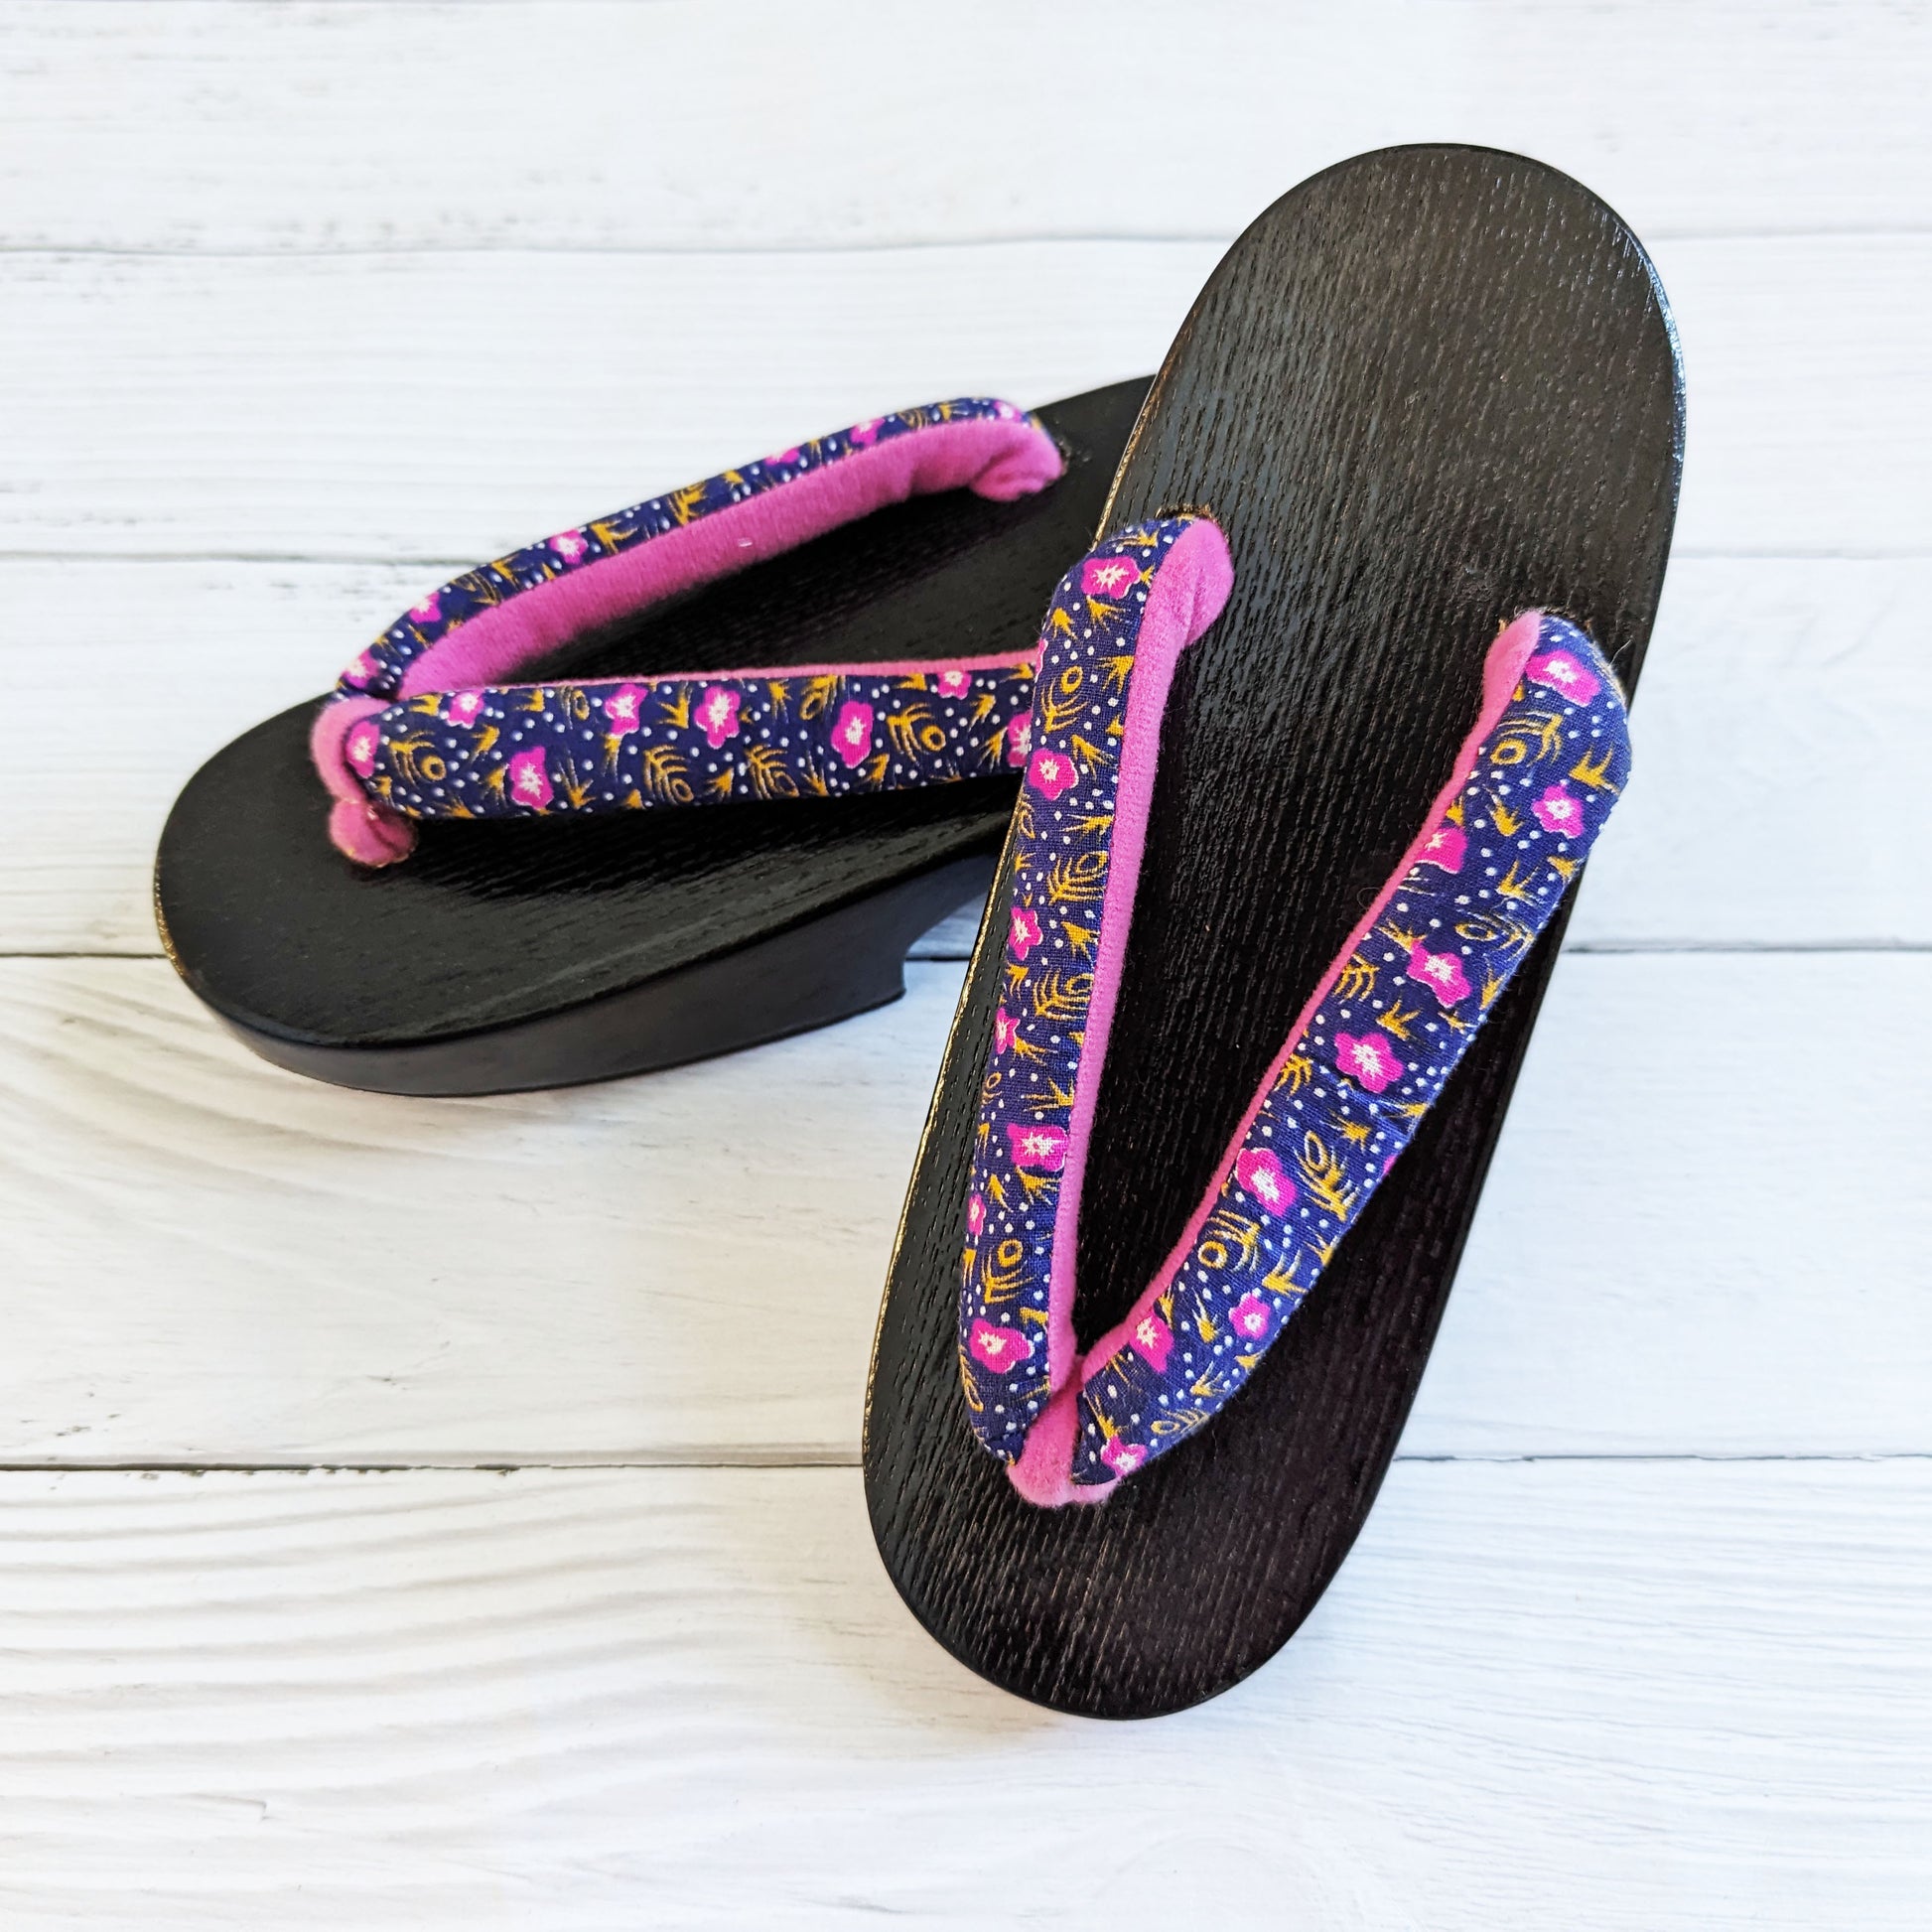 Japanese Geta Sandals - Pink Flowers Navy Blue